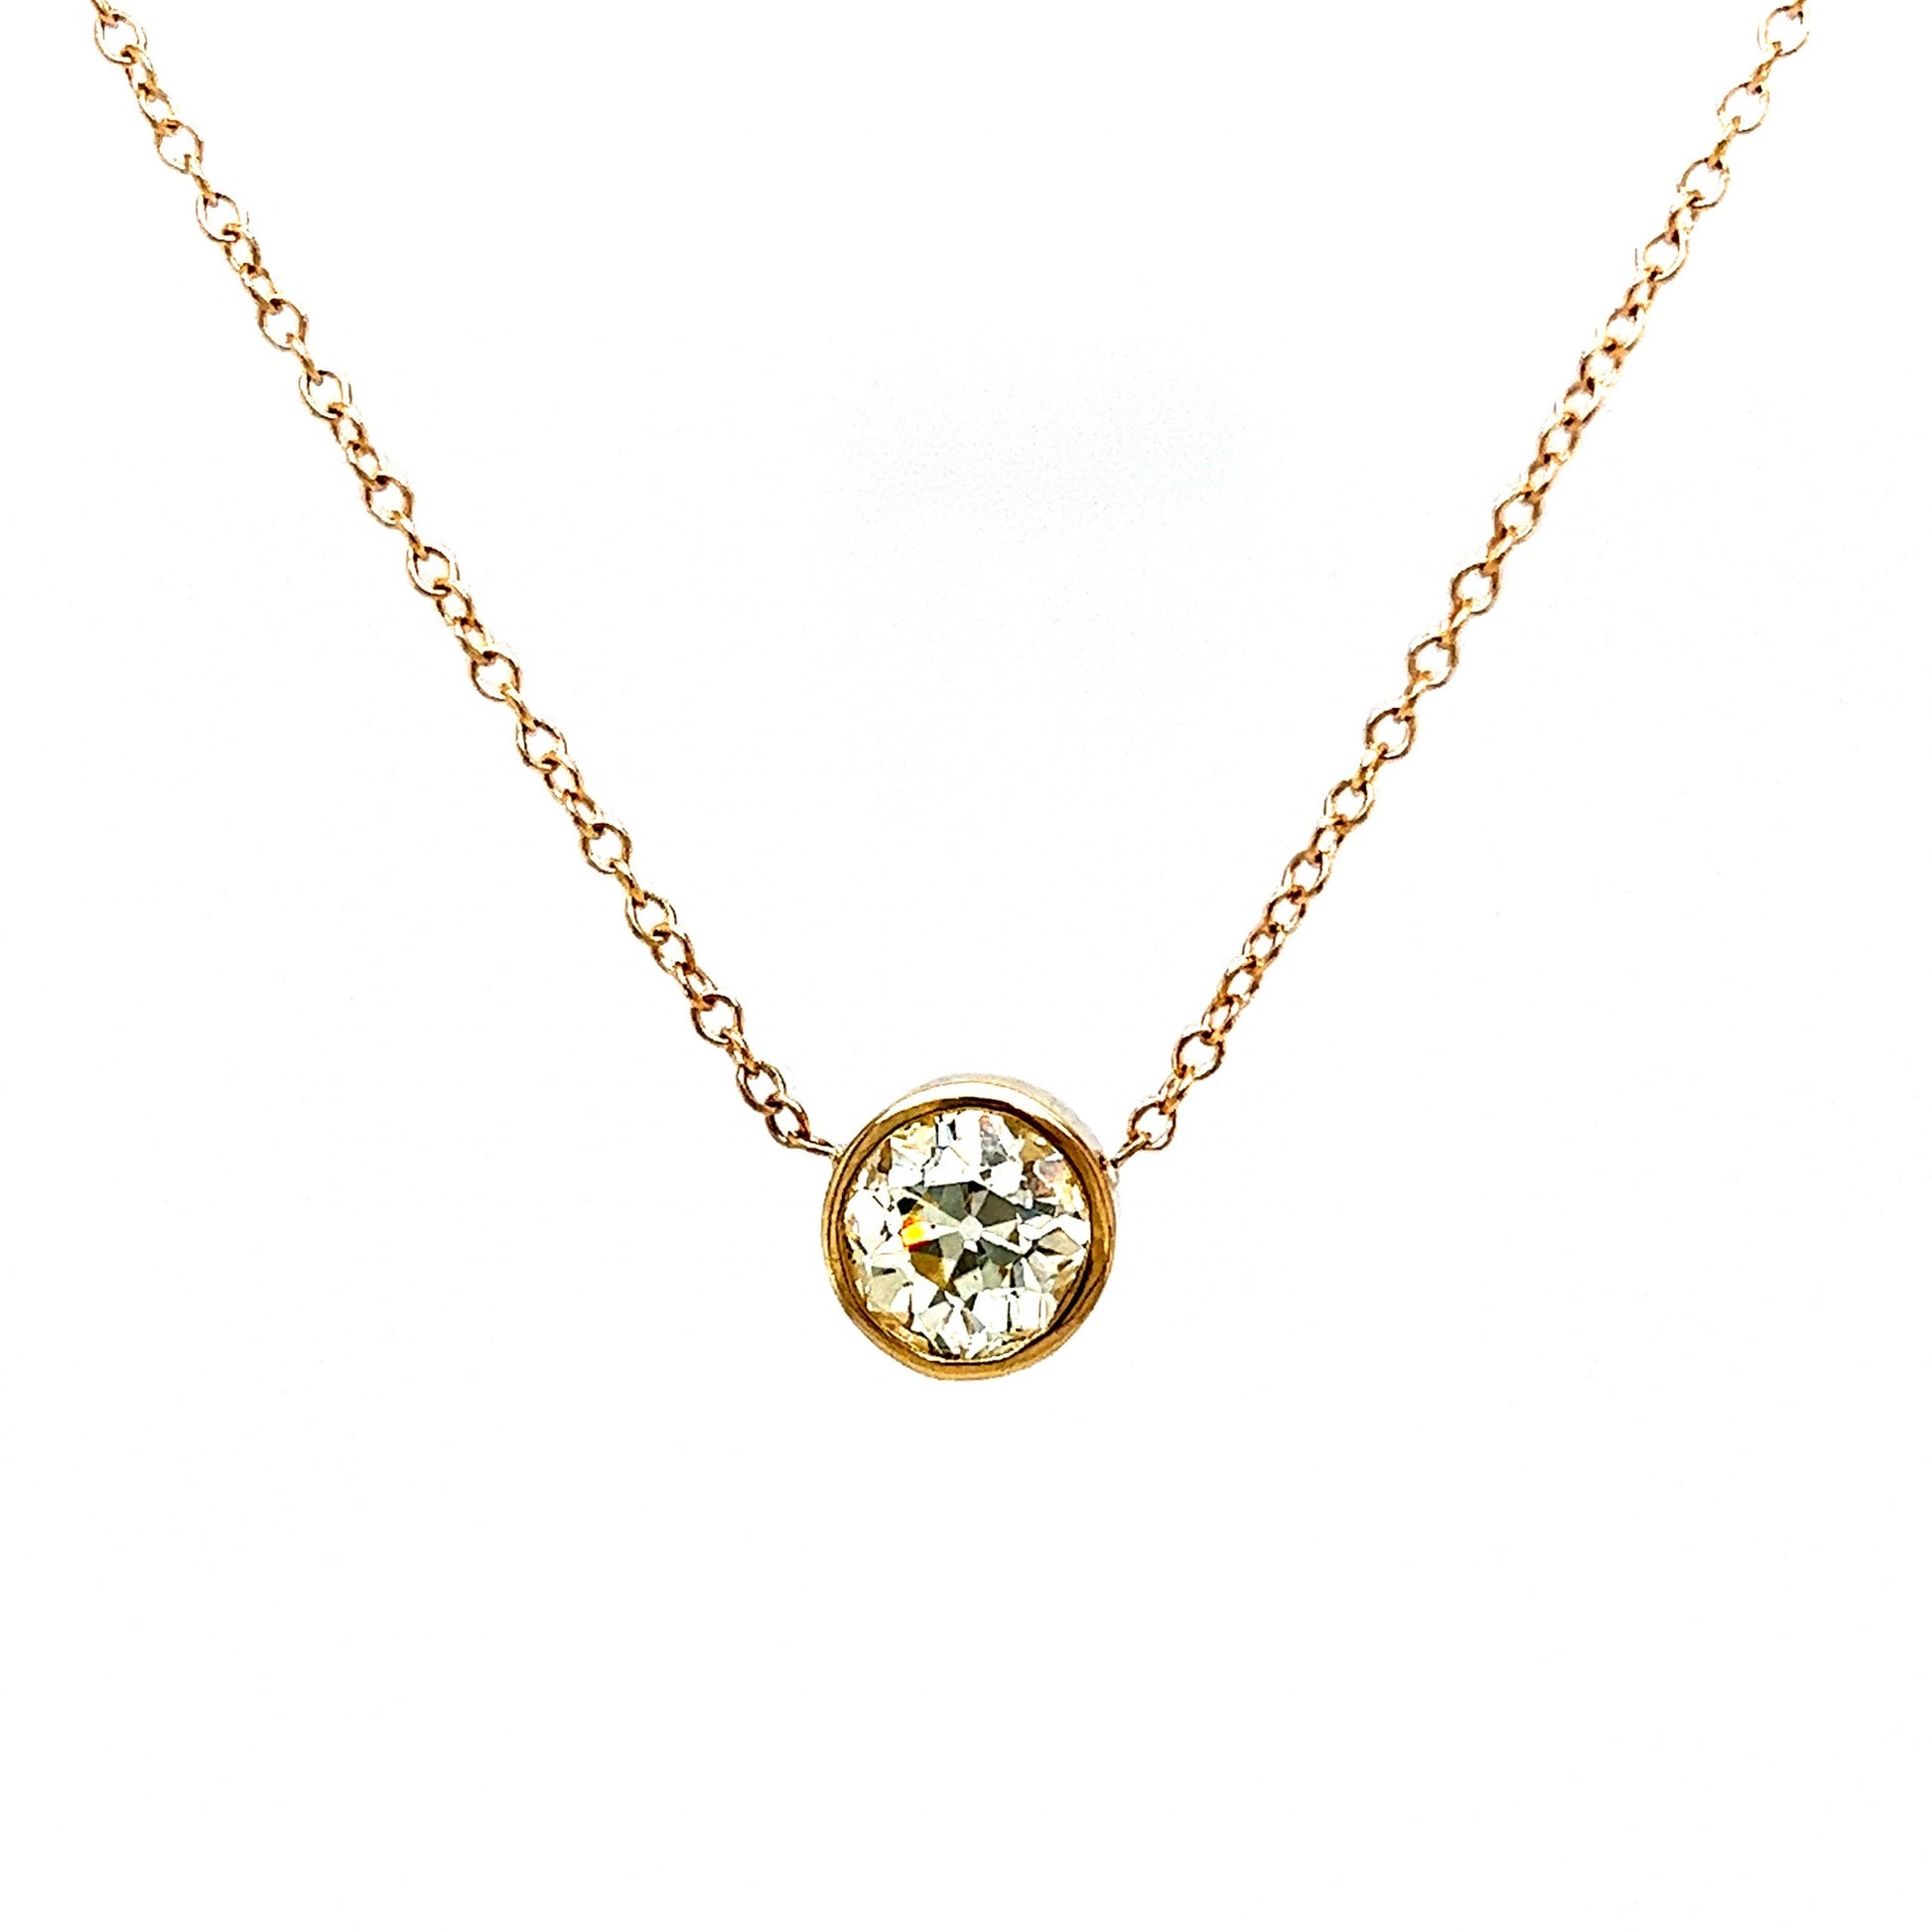 1.36 Bezel Set Old European Diamond Necklace in 14k Gold